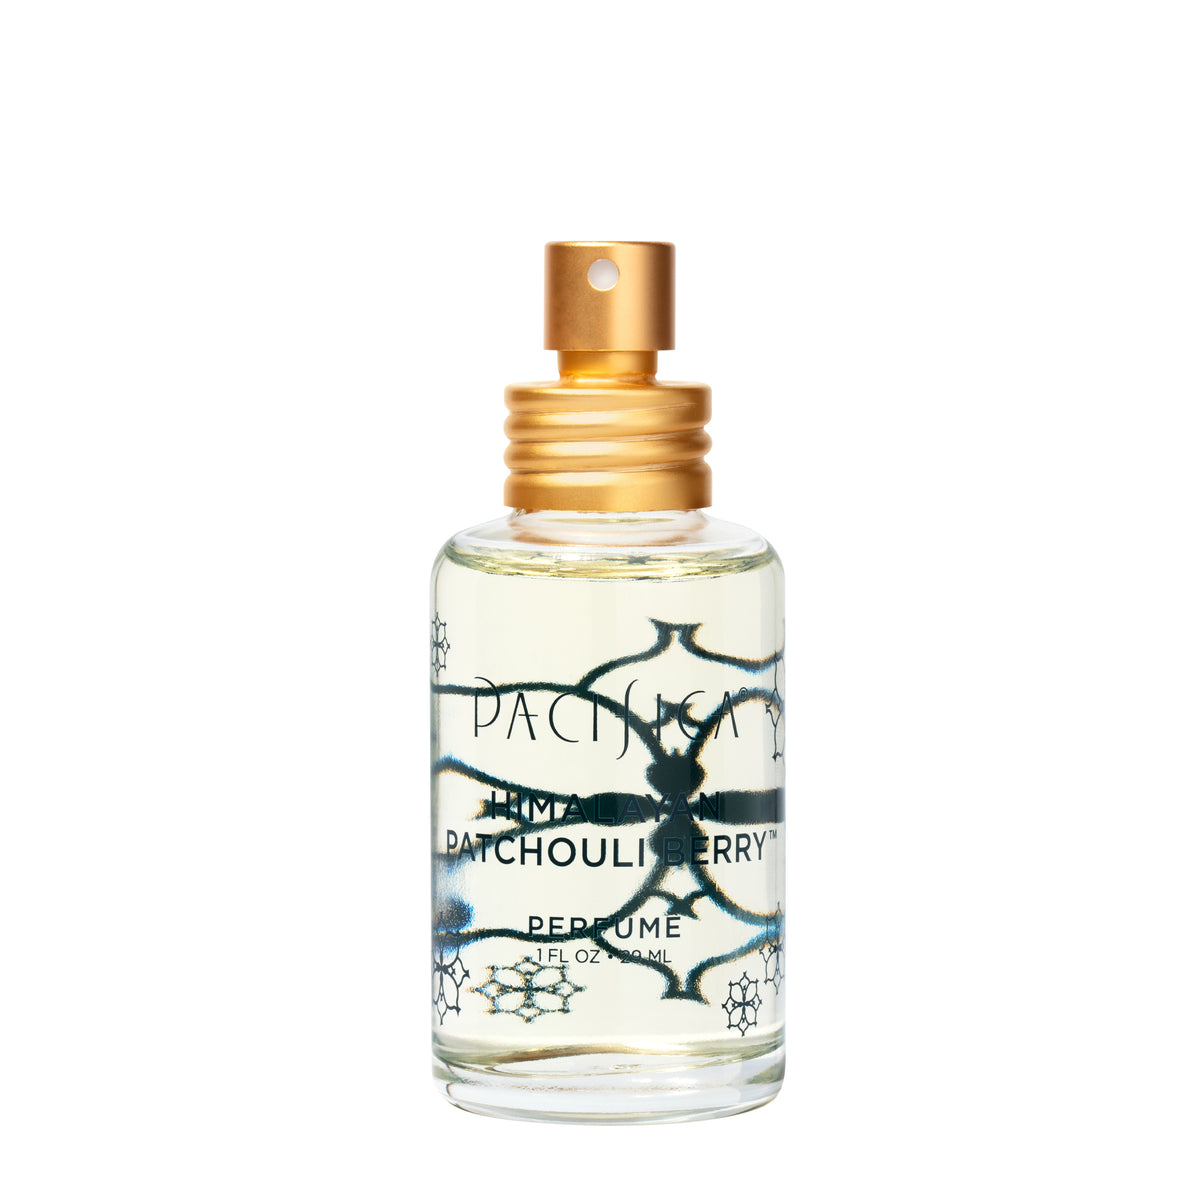 Himalayan Patchouli Berry Spray Perfume - Perfume - Pacifica Beauty